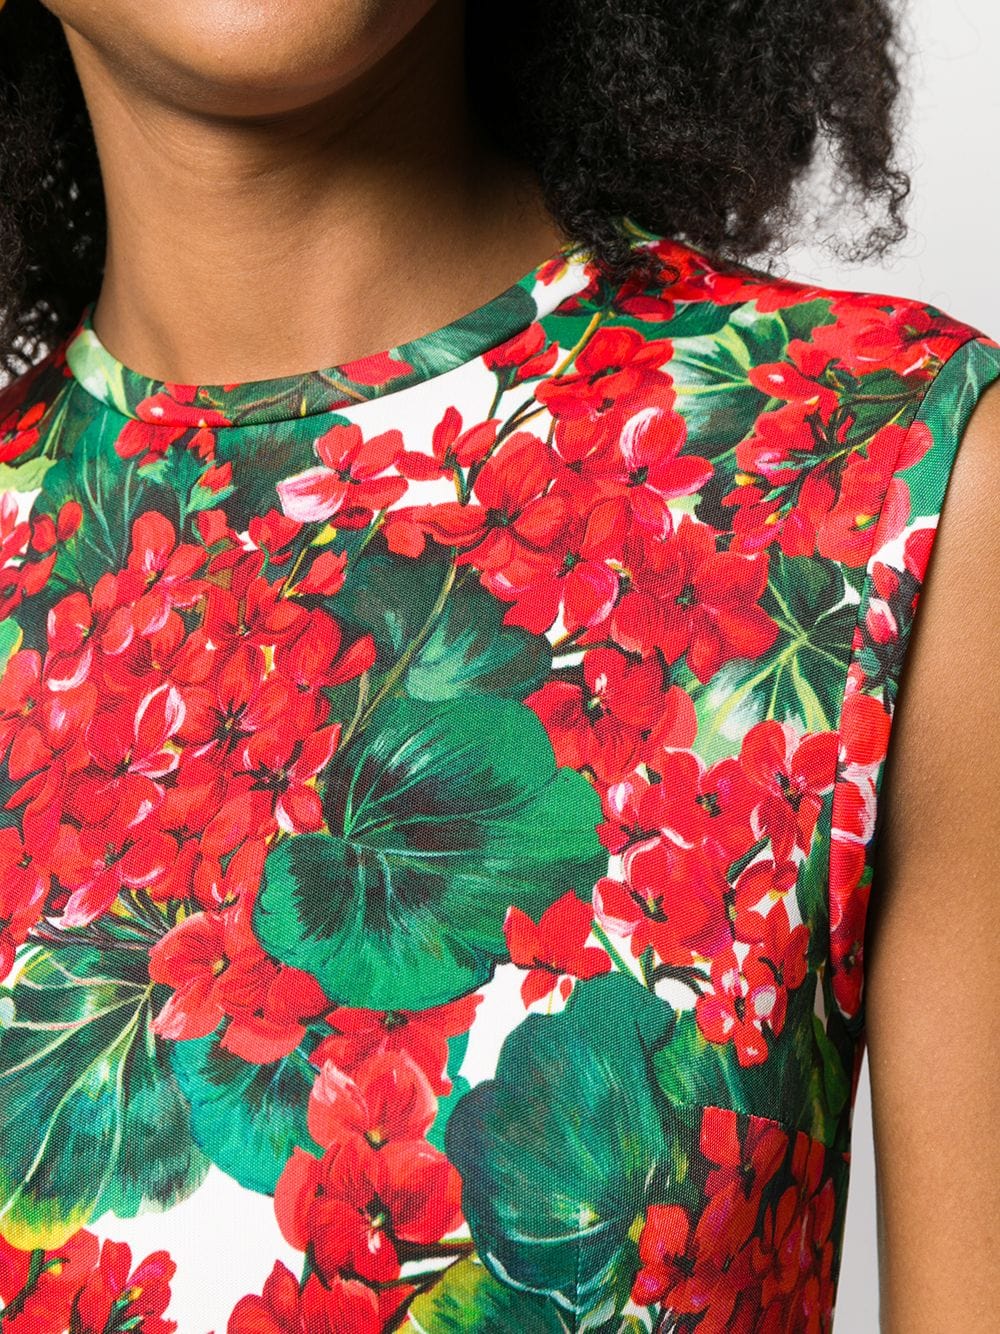 Dolce & Gabbana Floral Print Maxi Dress